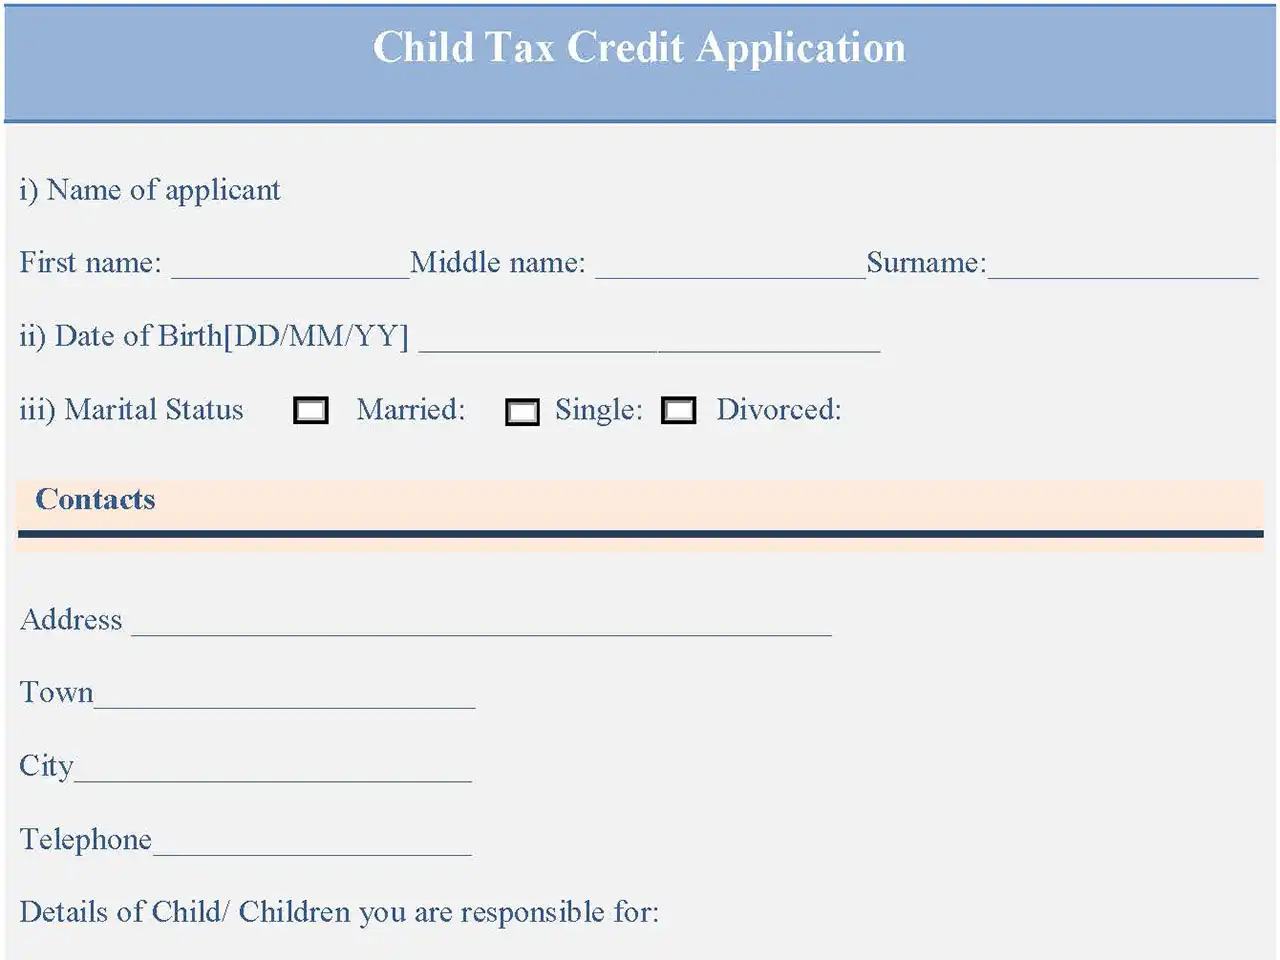 Child Tax Credit Application Form